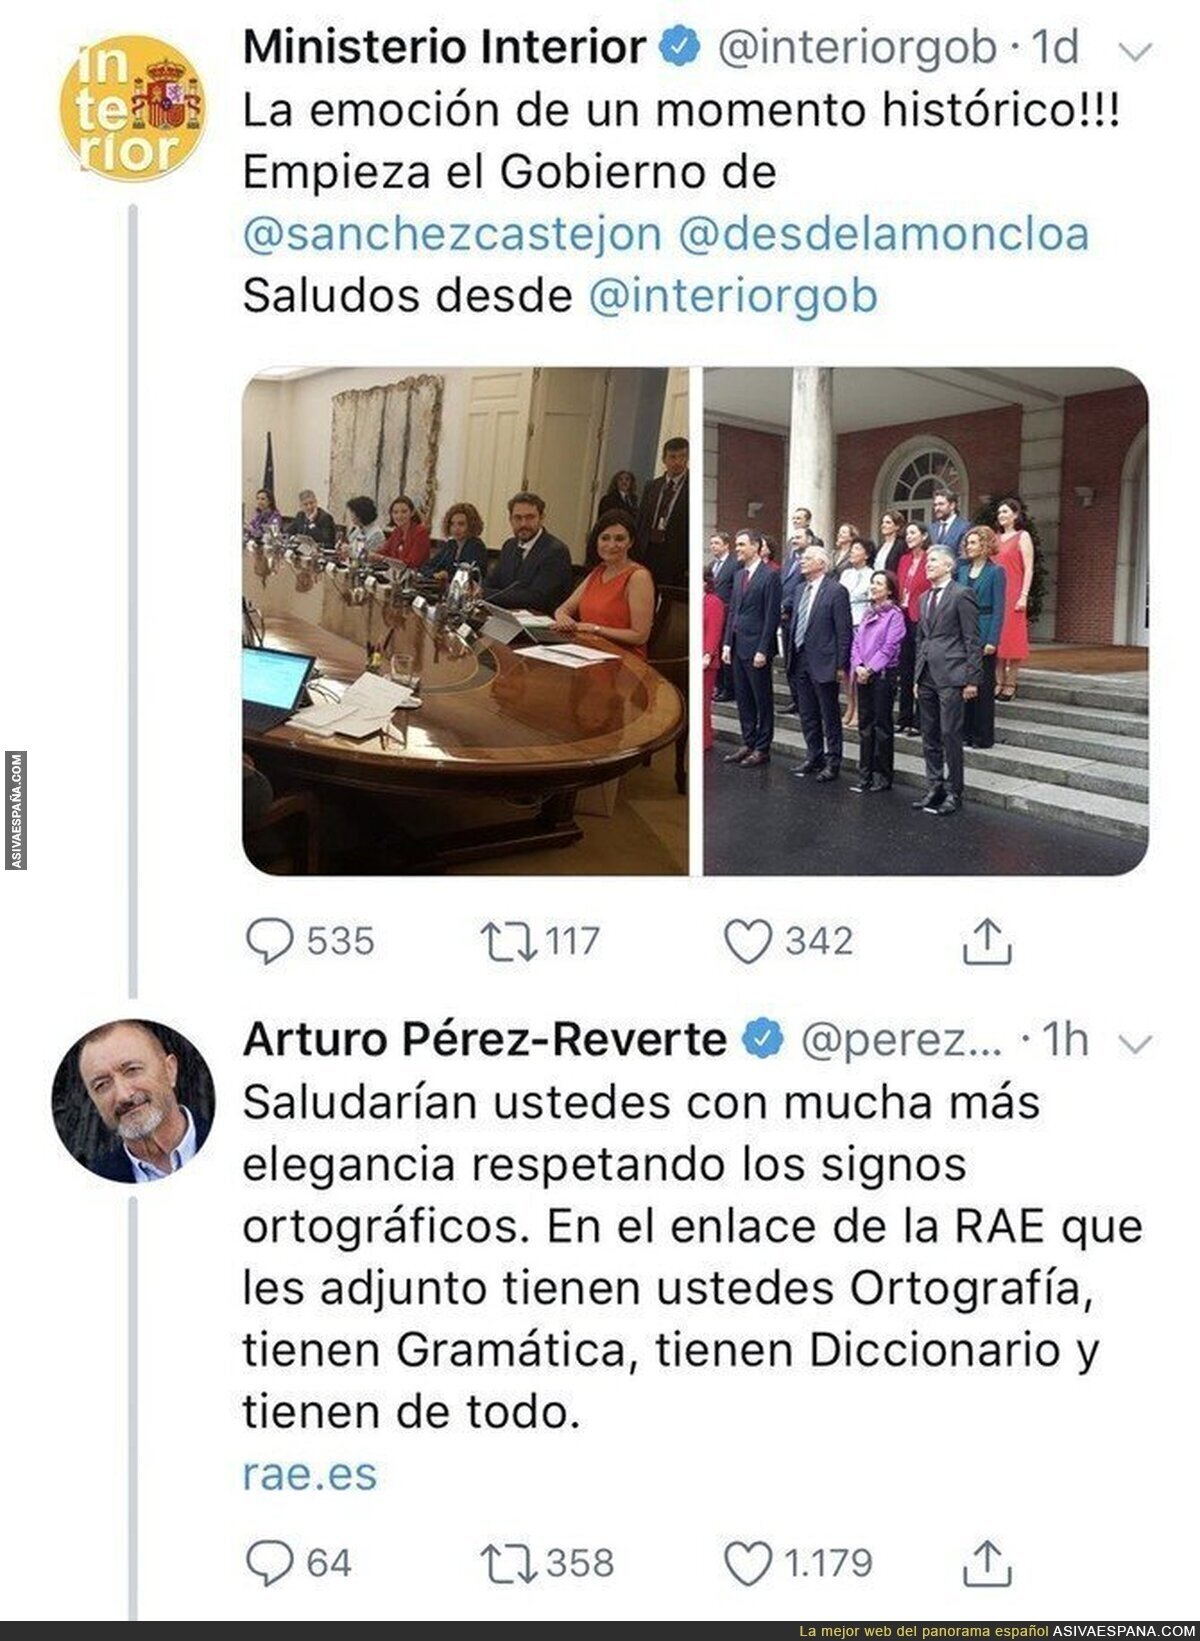 Arturo Pérez-Reverte deja por los suelos al Ministerio de Interior tras tuitear un mensaje lleno de faltas